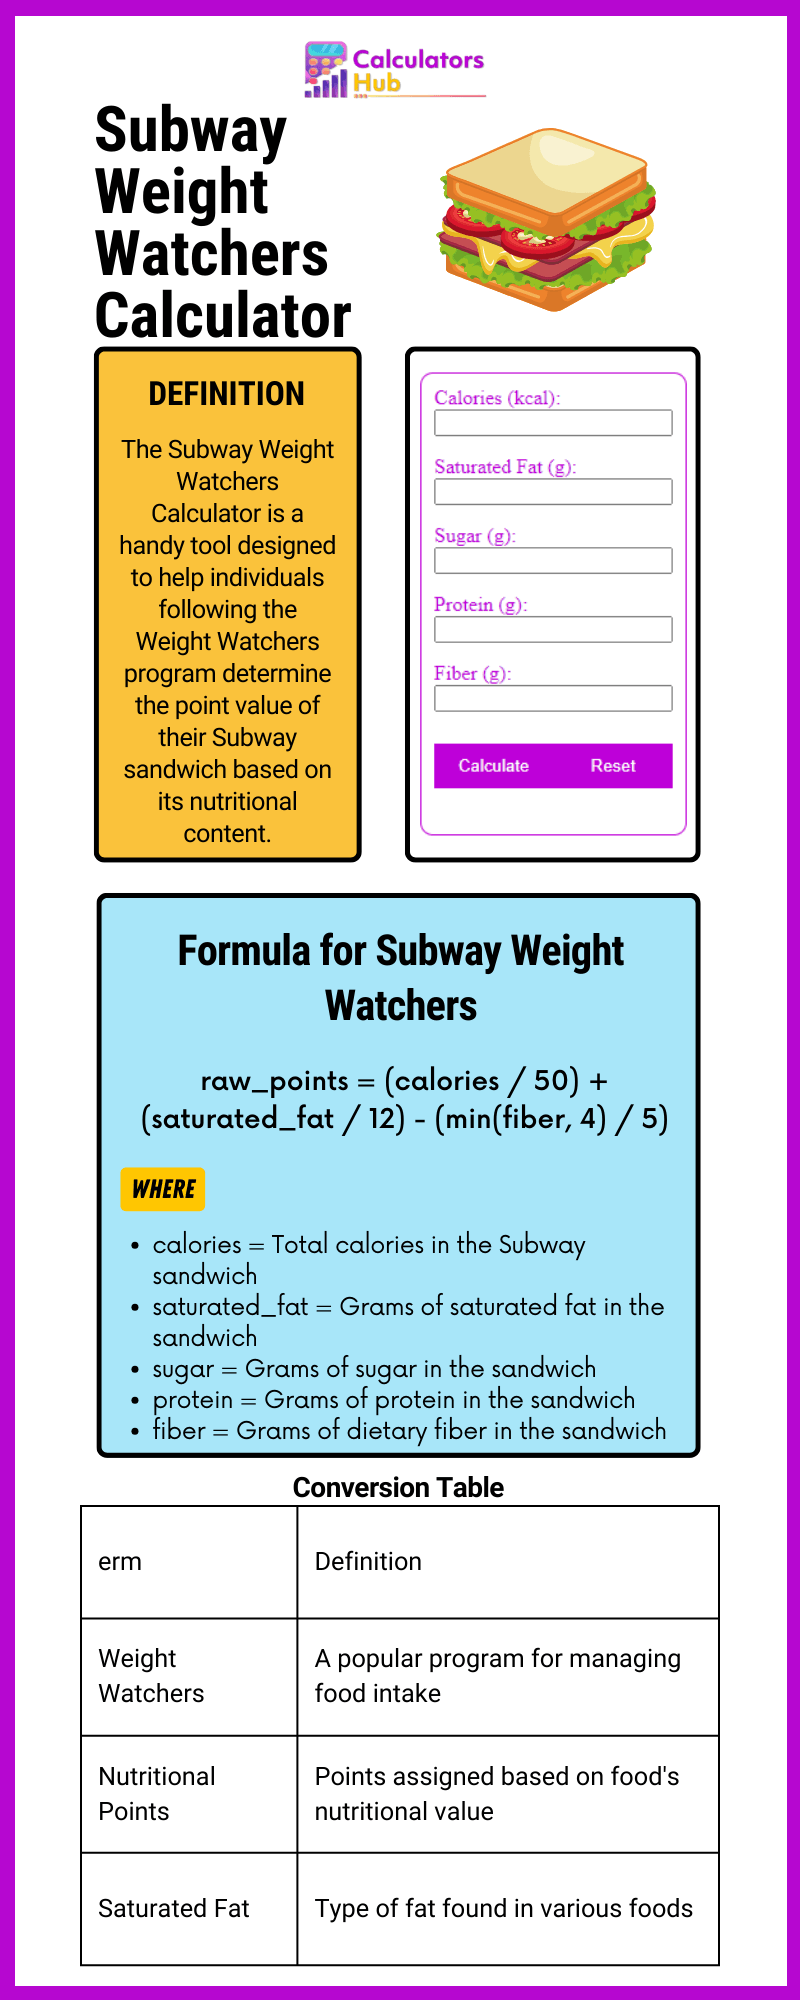 Subway Weight Watchers Calculator